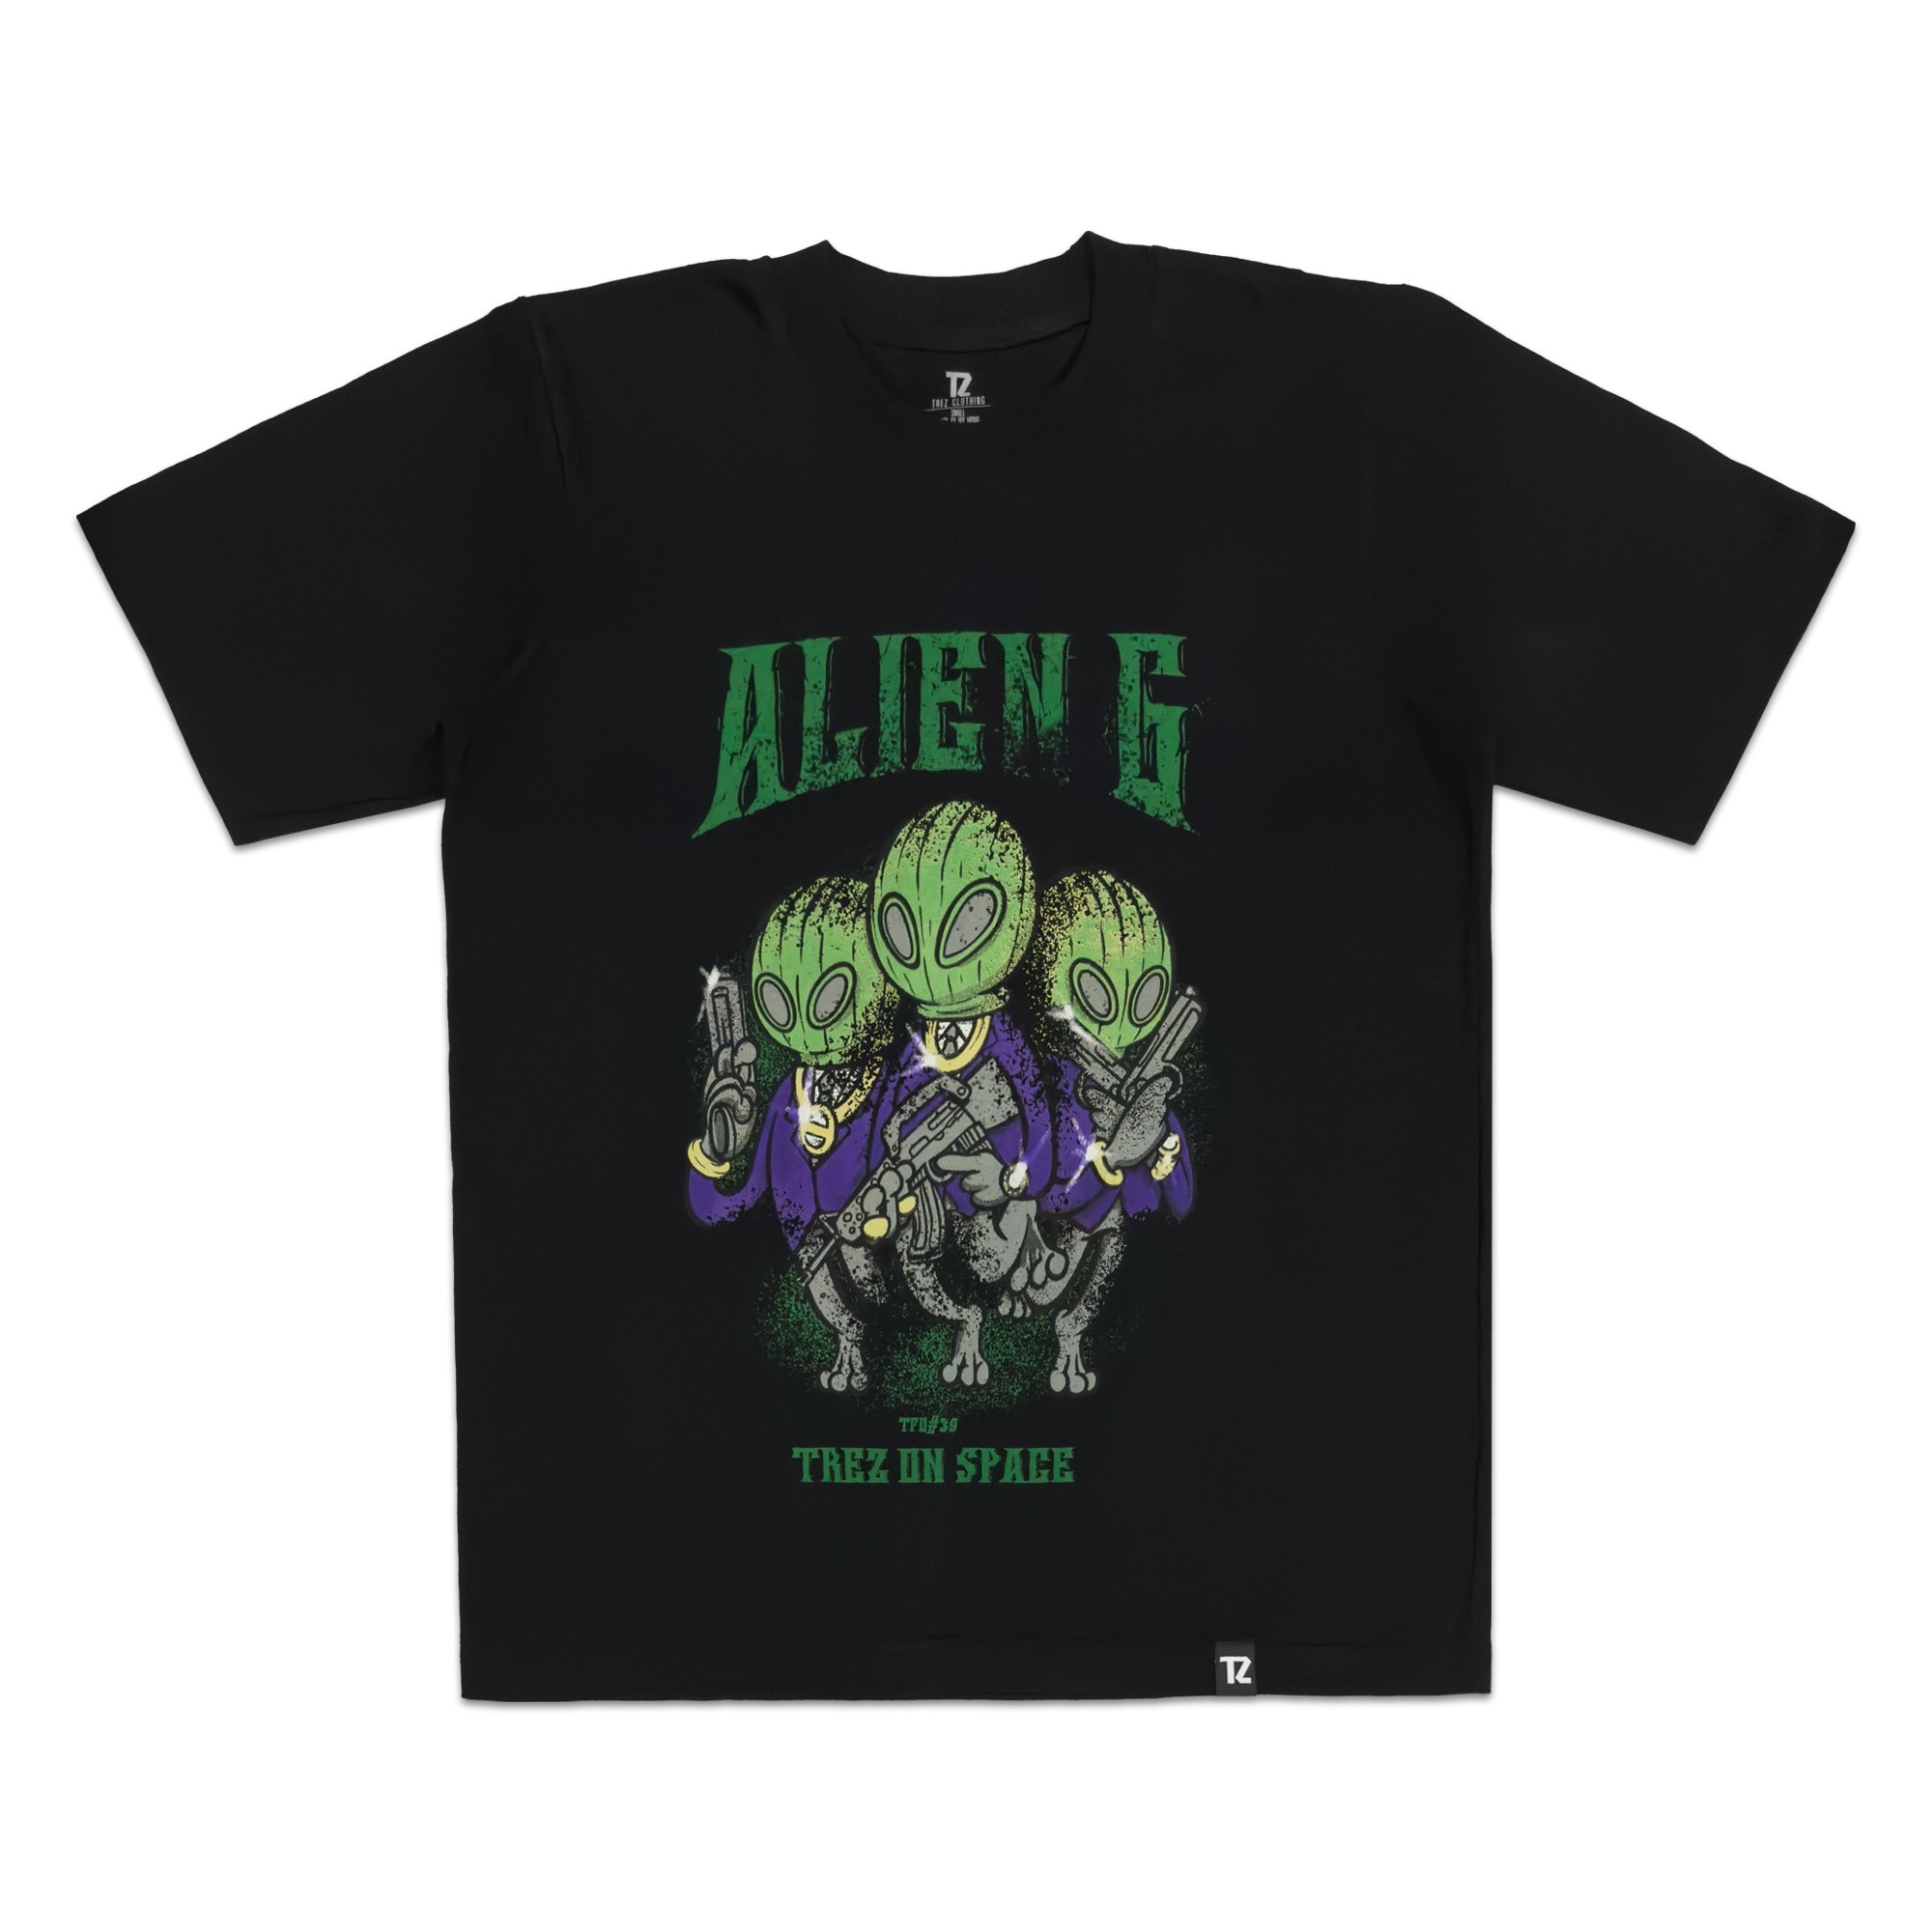 Alien G Tee Size M